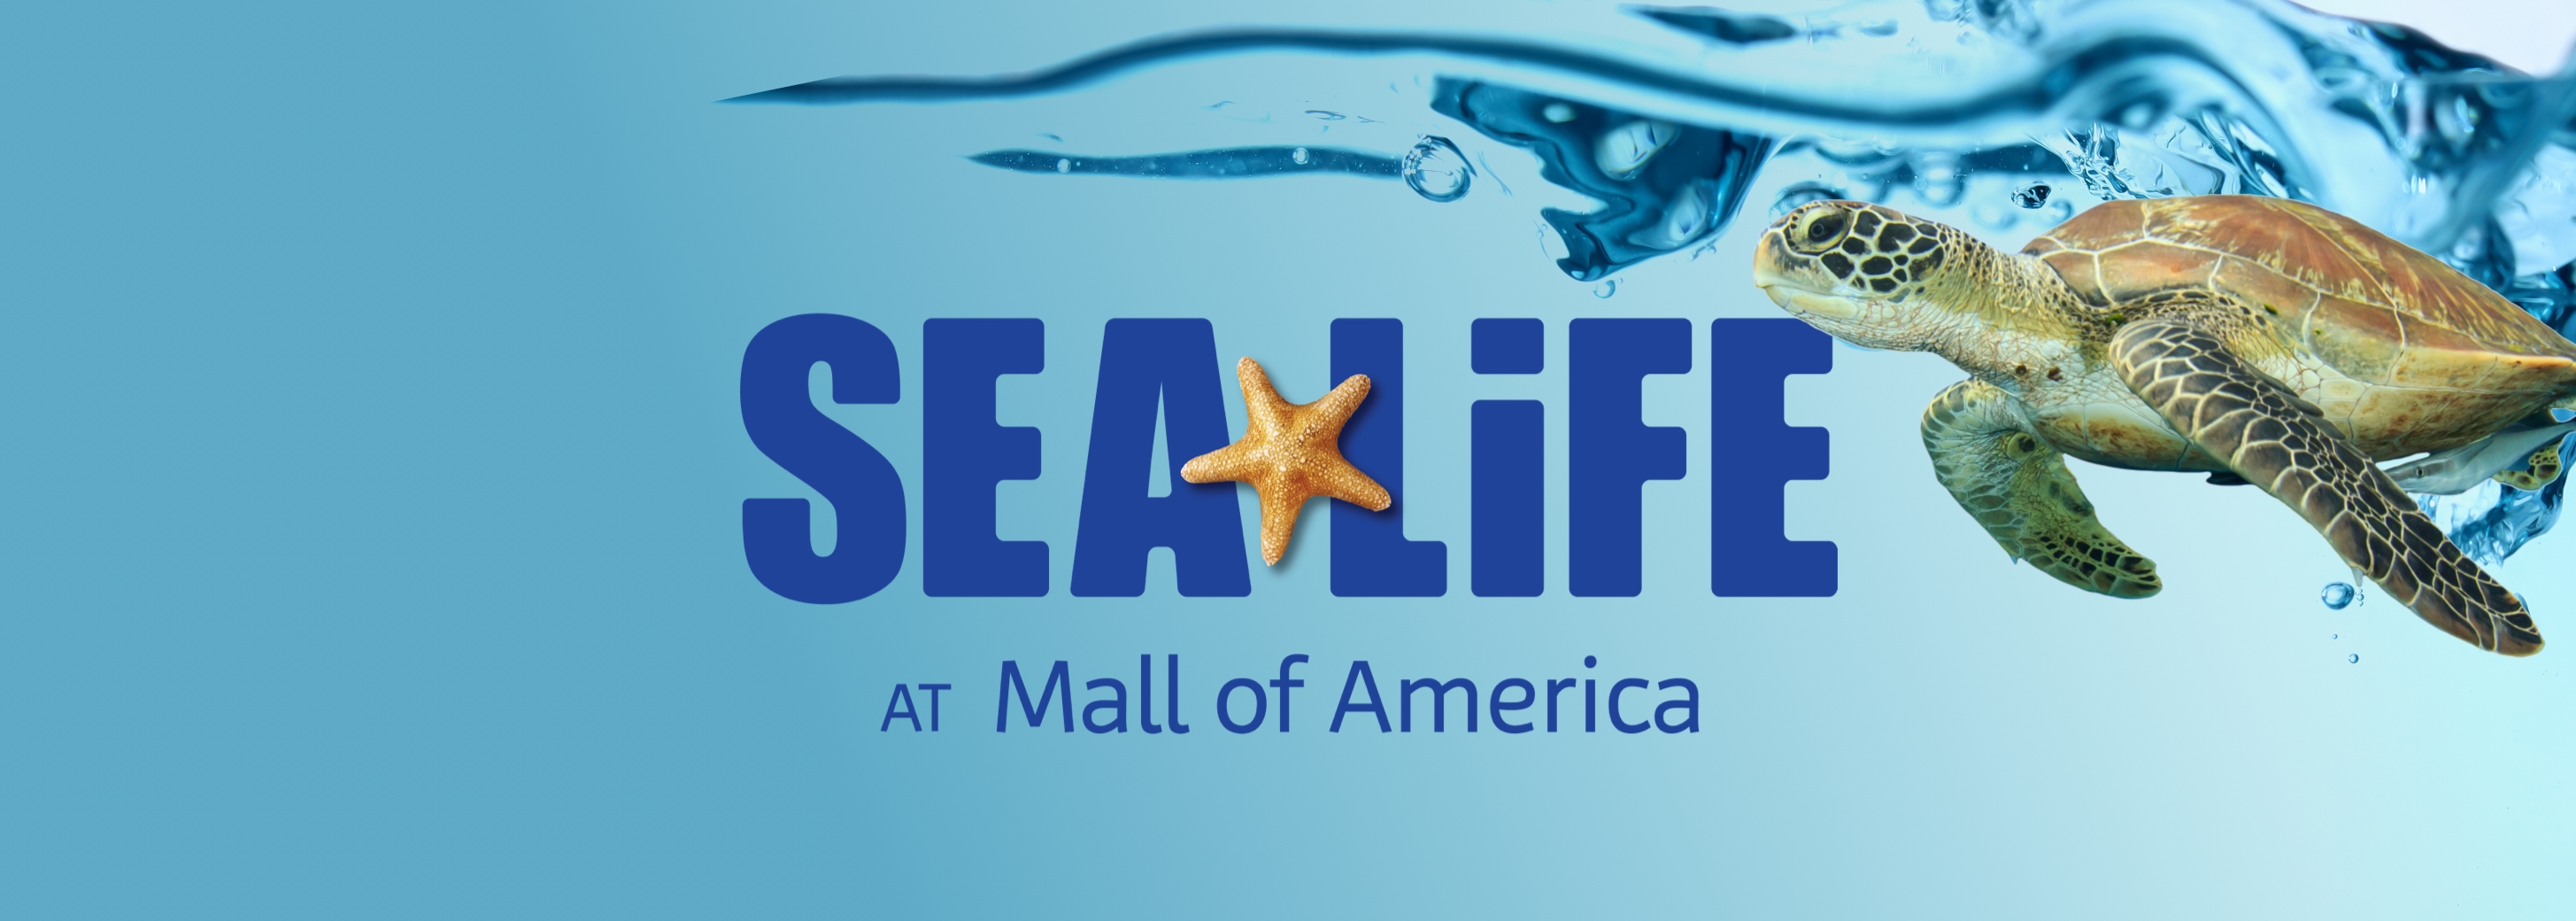 SEA LIFE Aquarium at Mall of America Discounts for Military, Nurses, & More